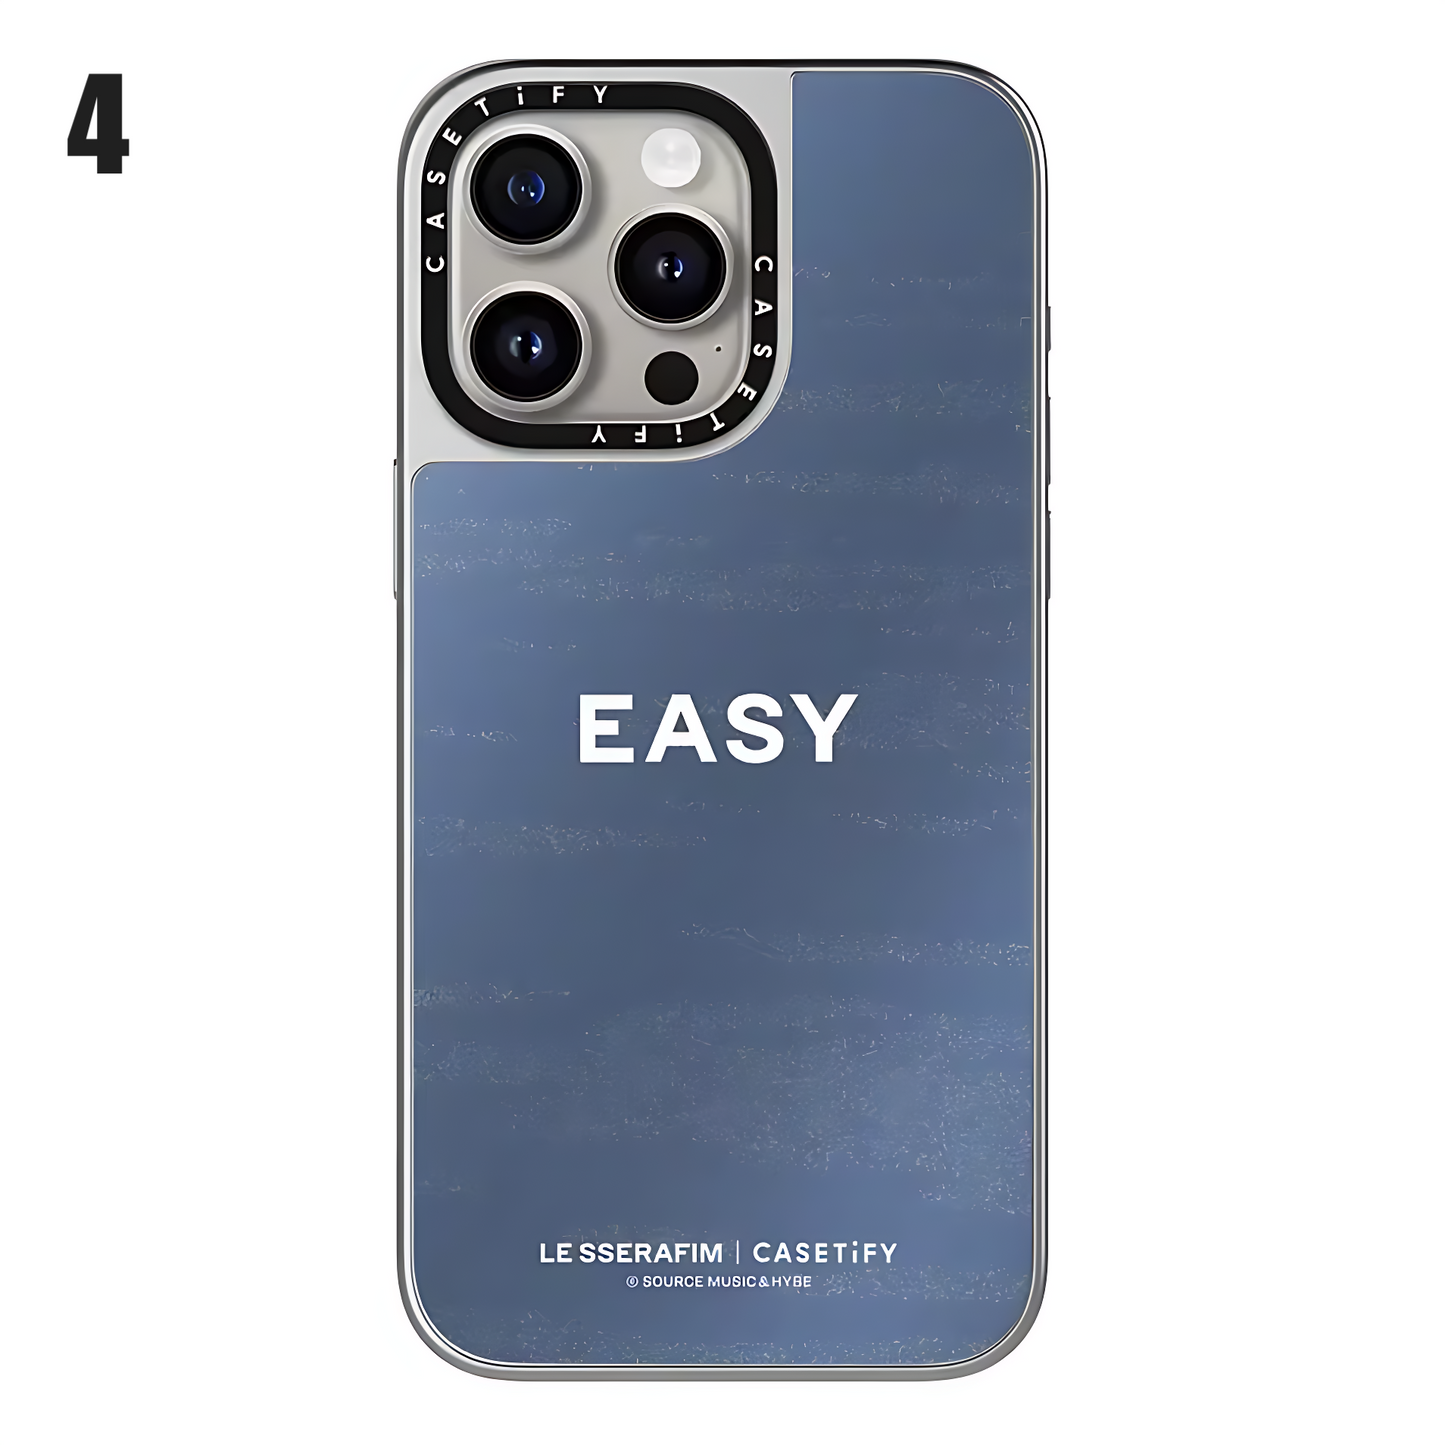 Le Sserafim Easy Phone Case